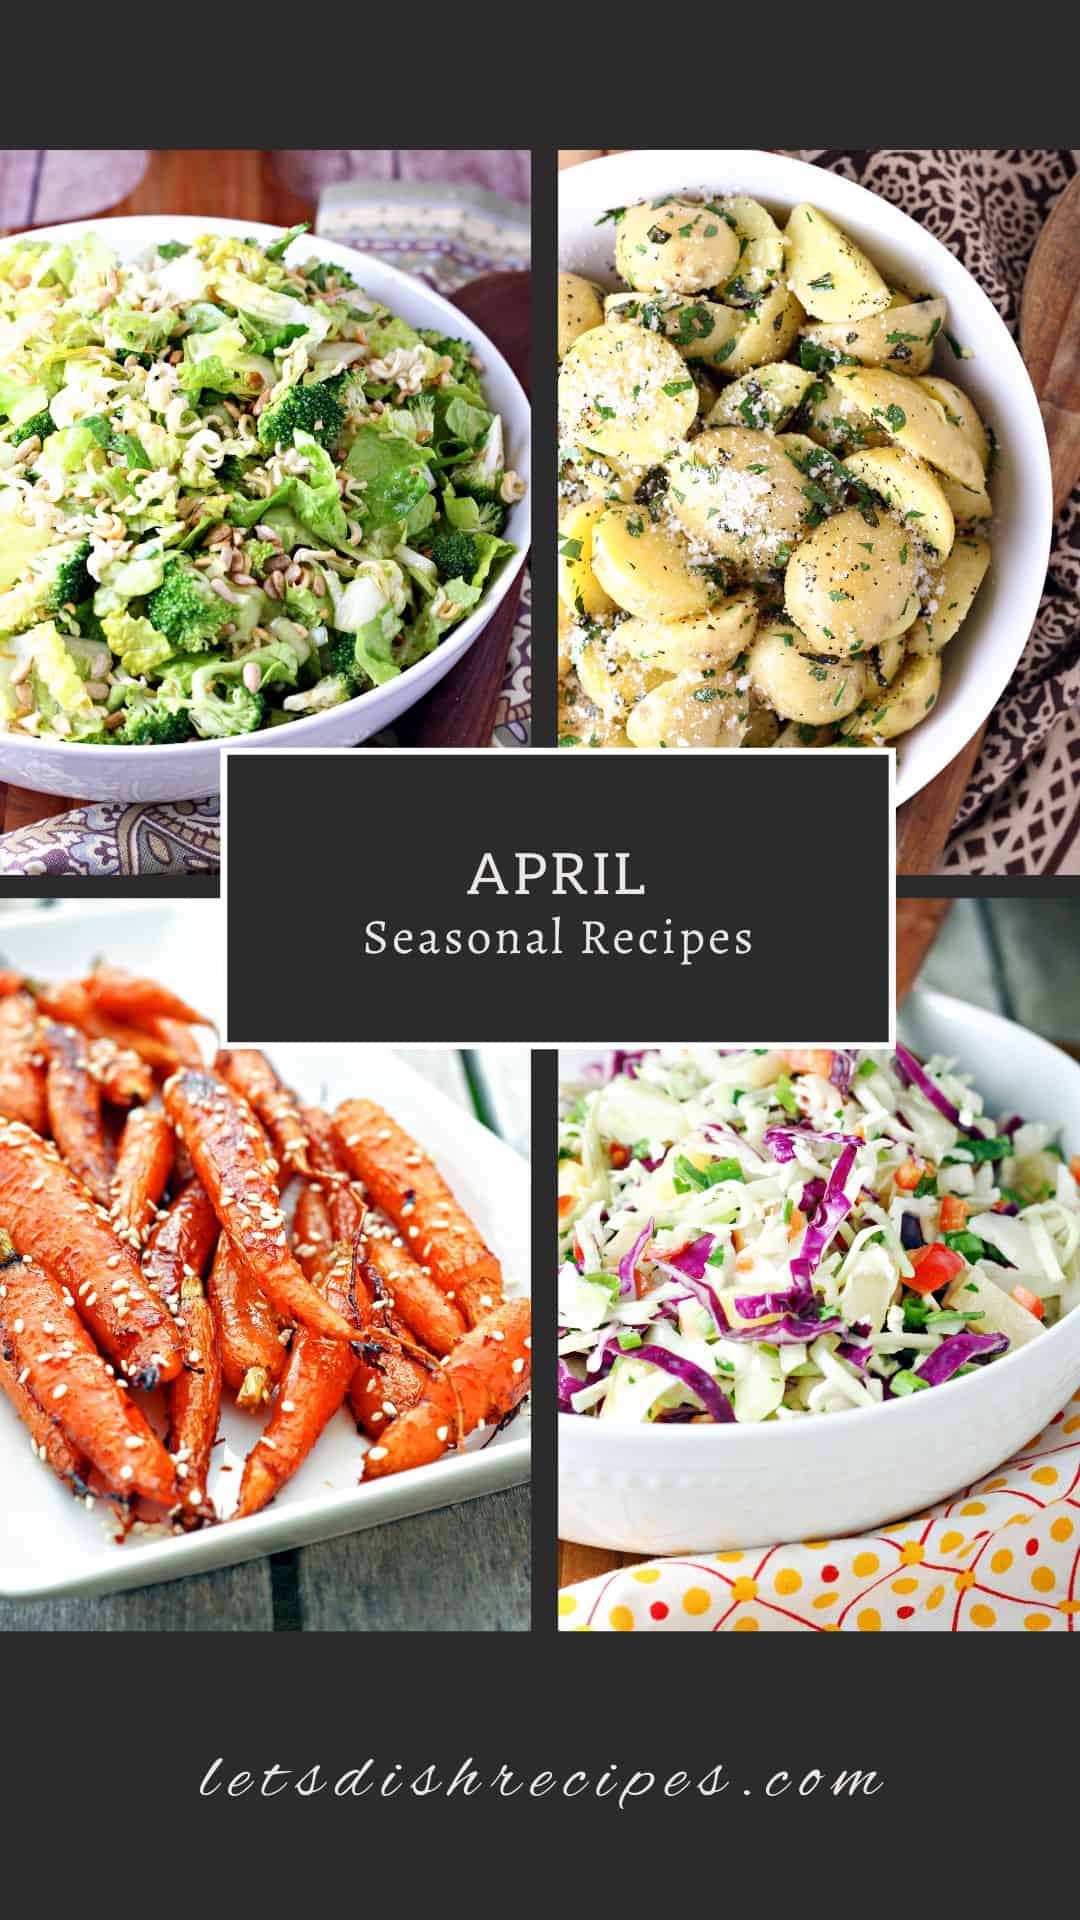 In Season Recipes: April